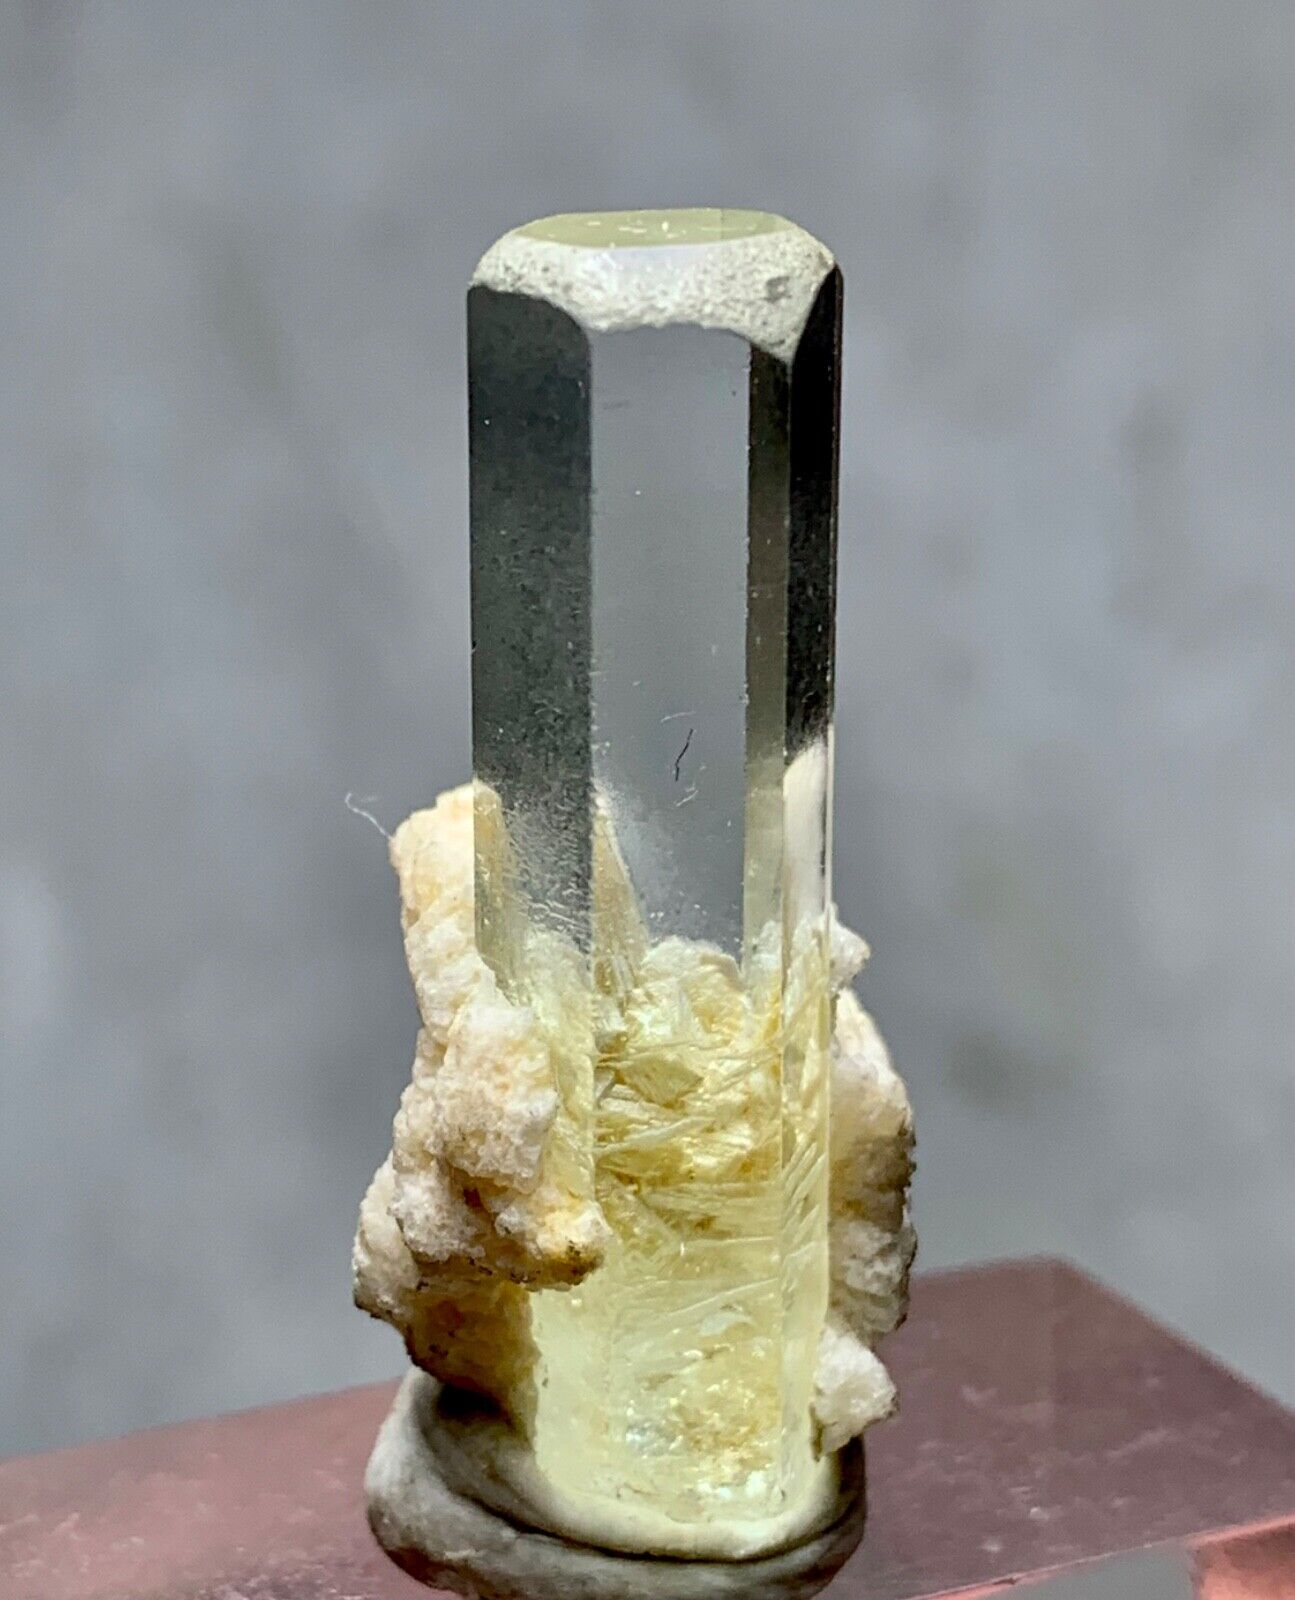 26 Carat Terminated Aquamarine Crystal On Feldspar From Shigar Pakistan